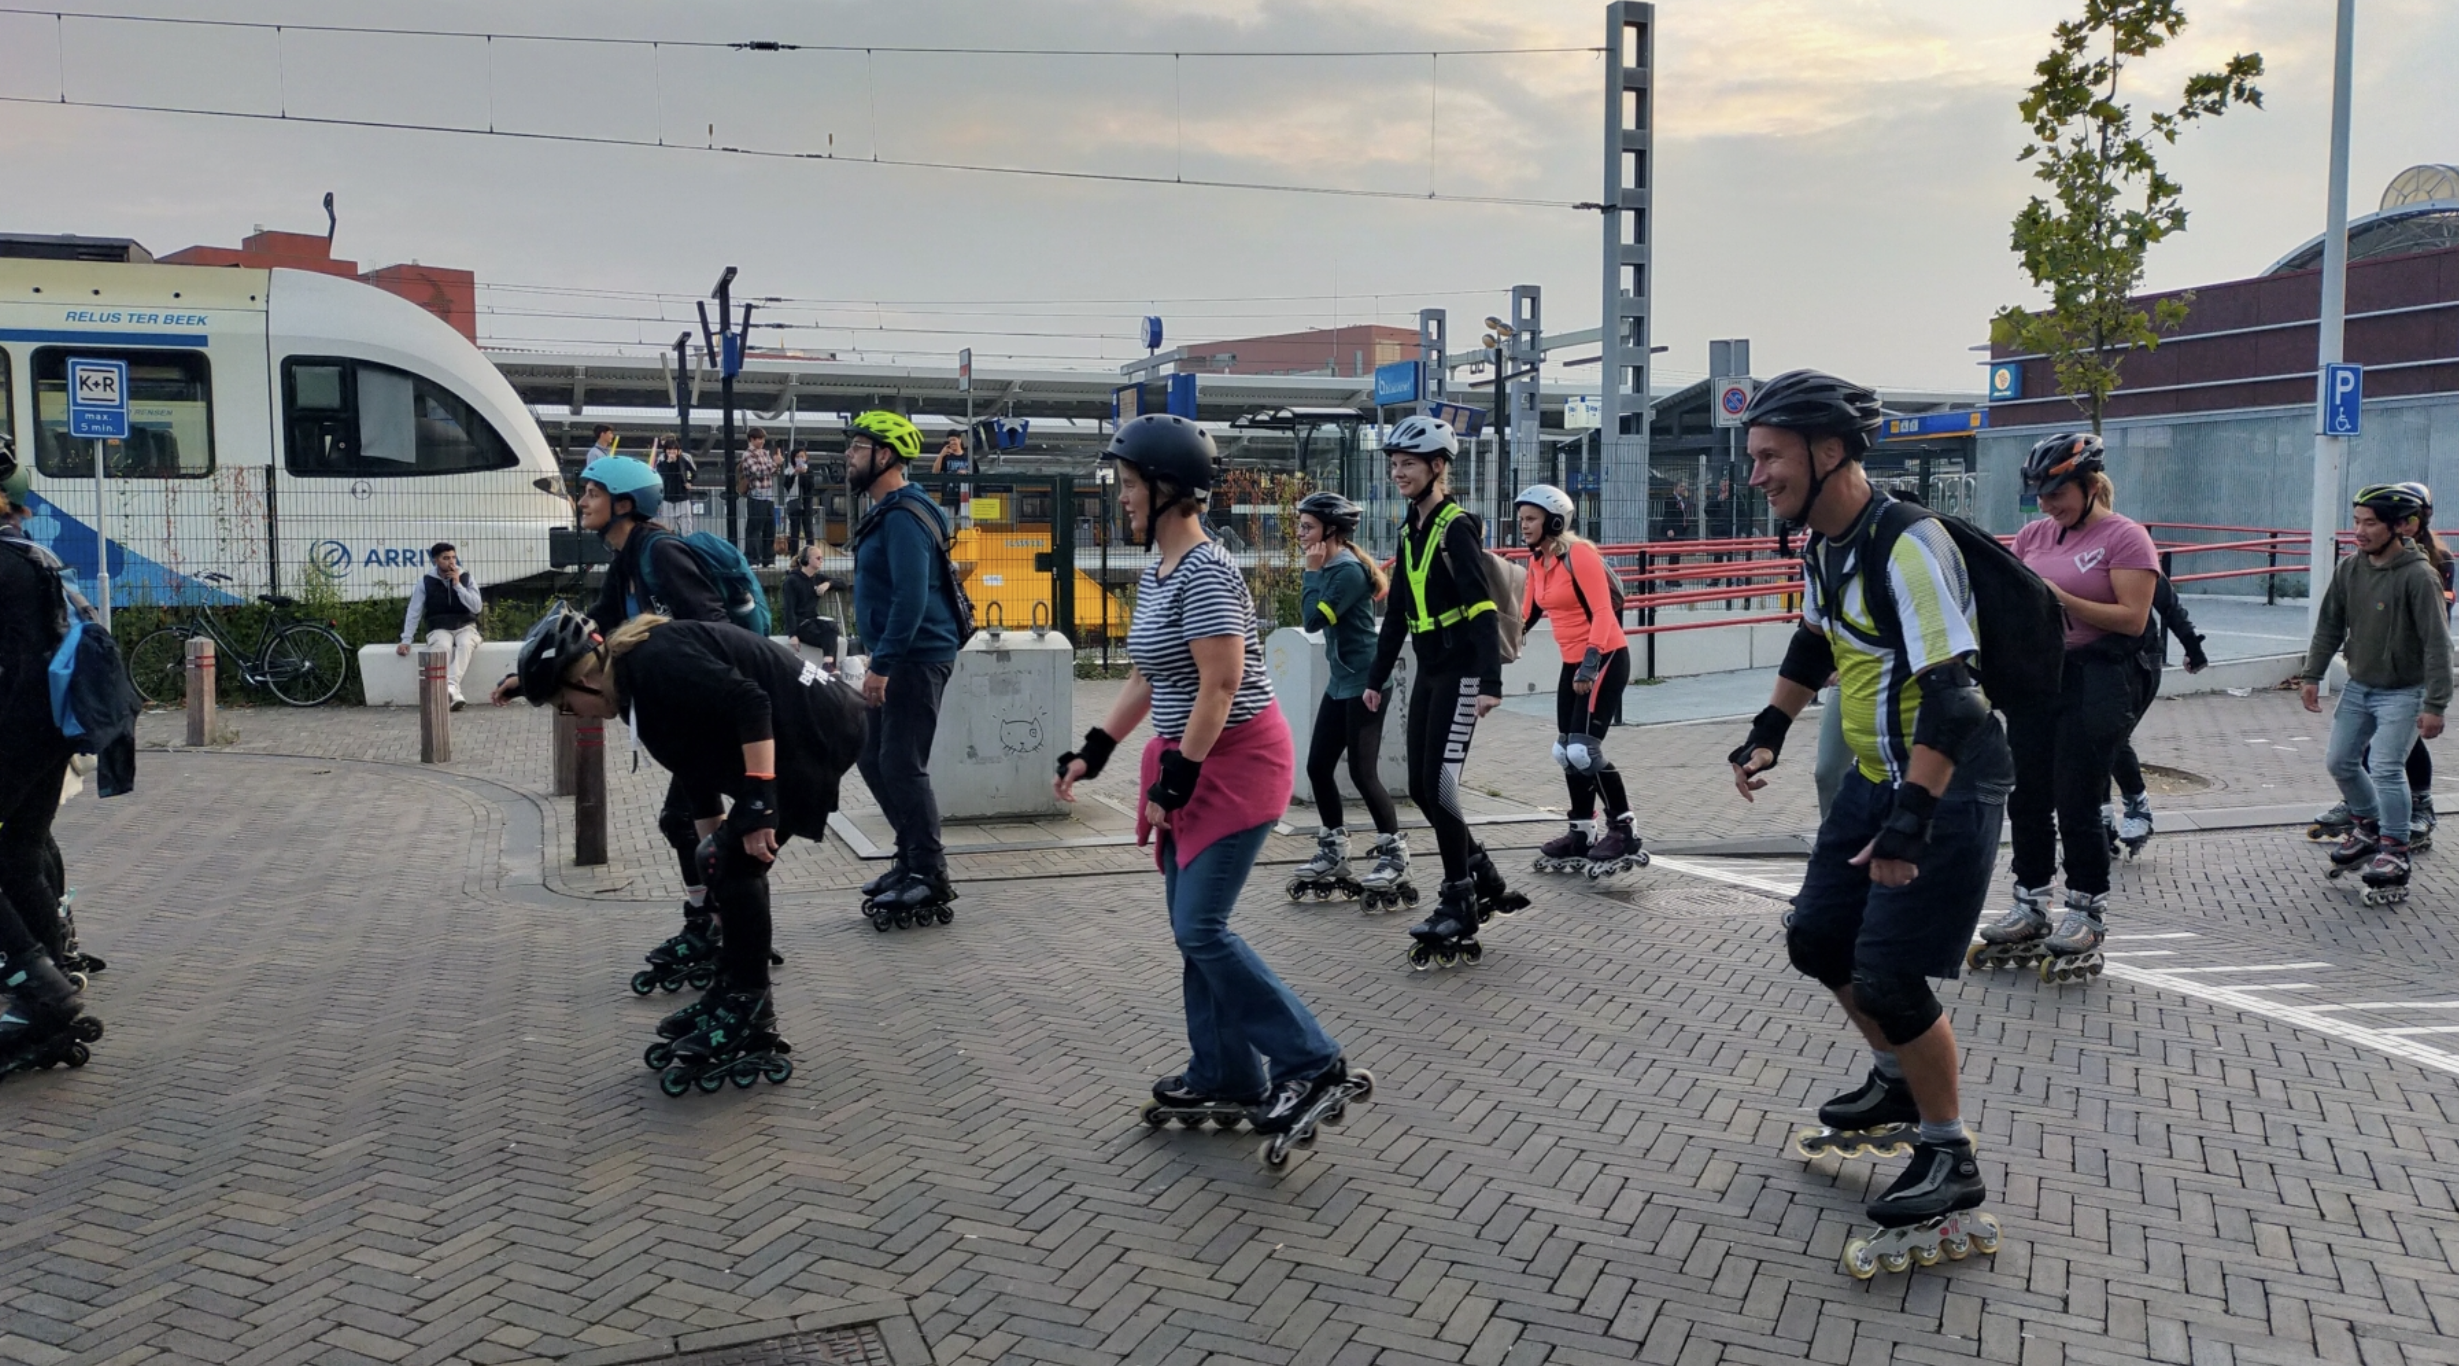 Night skate Zwolle bijna van start